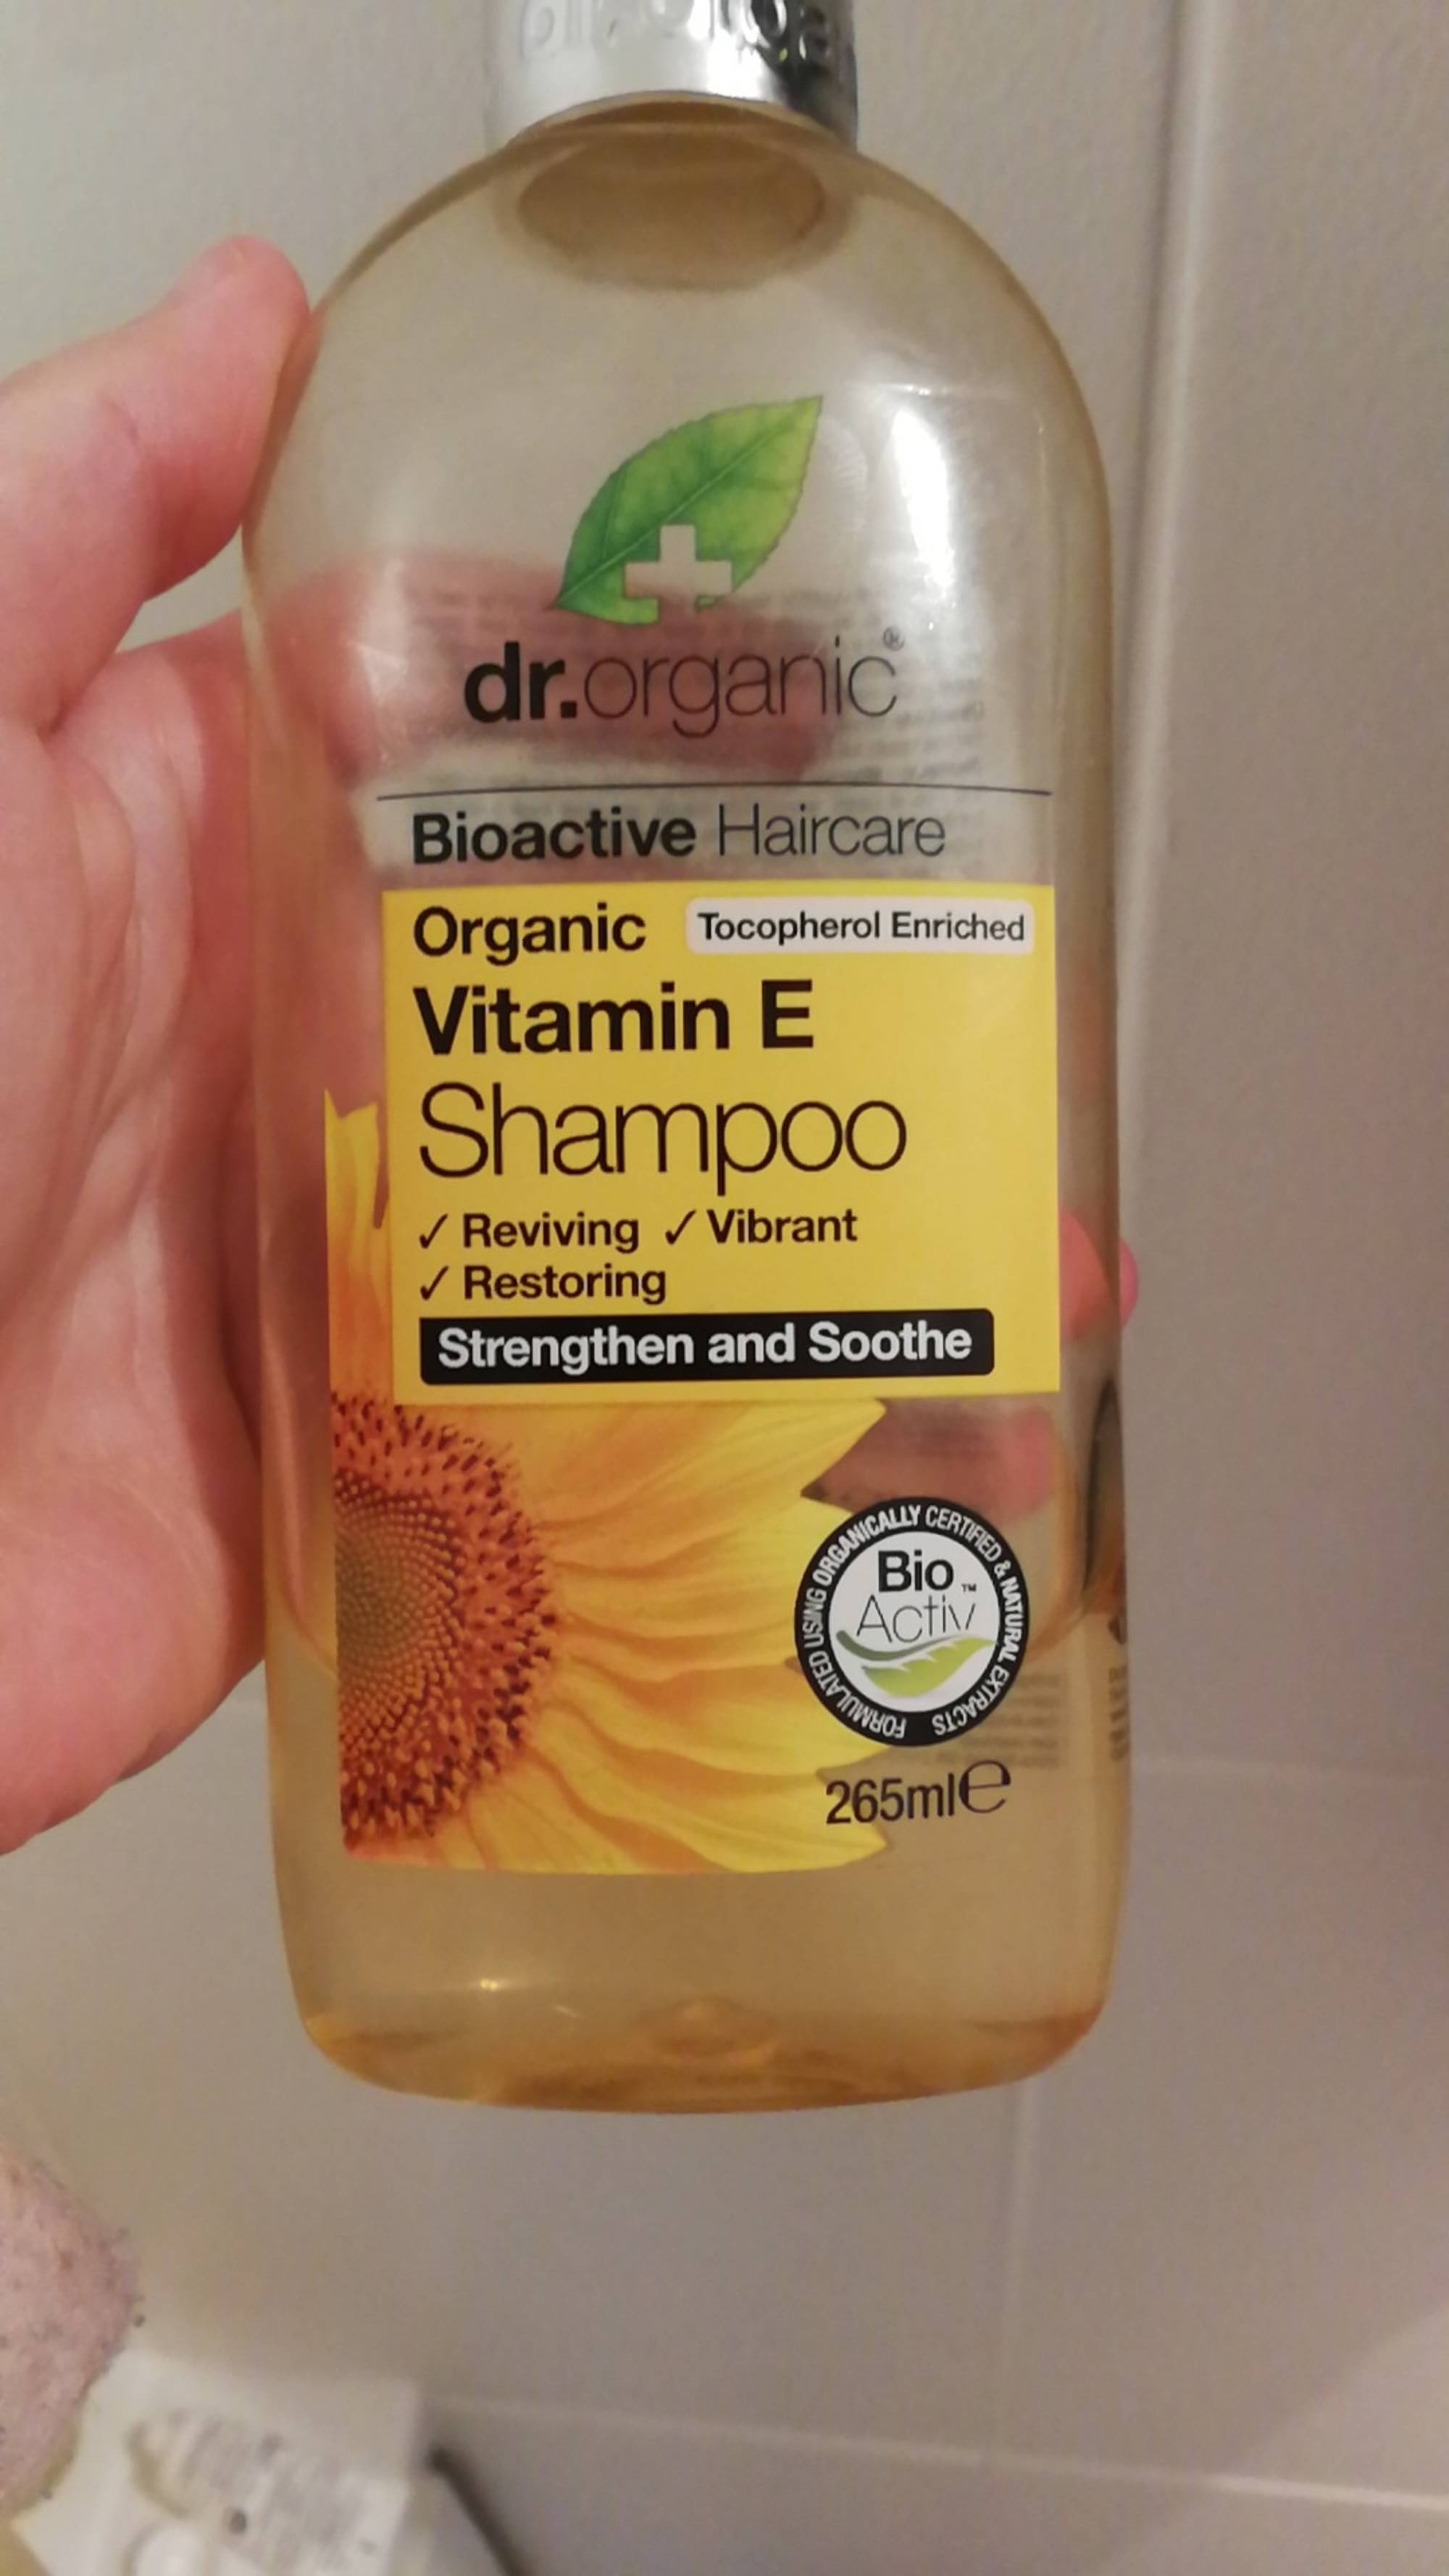 DR. ORGANIC - Organic Vitamin E - Shampoo